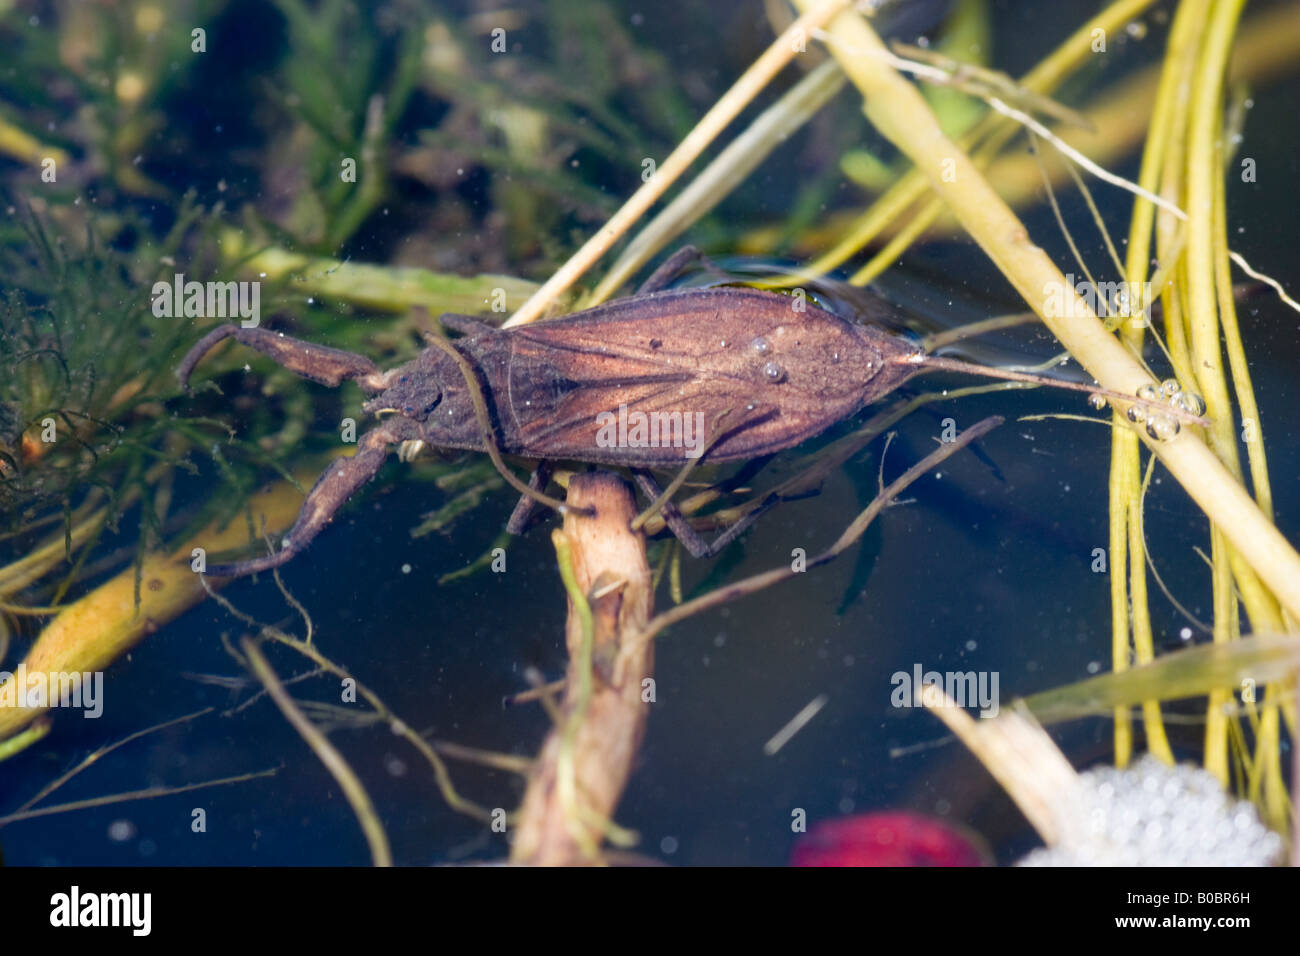 water scorpion, Nepa cinerea in a pond Stock Photo